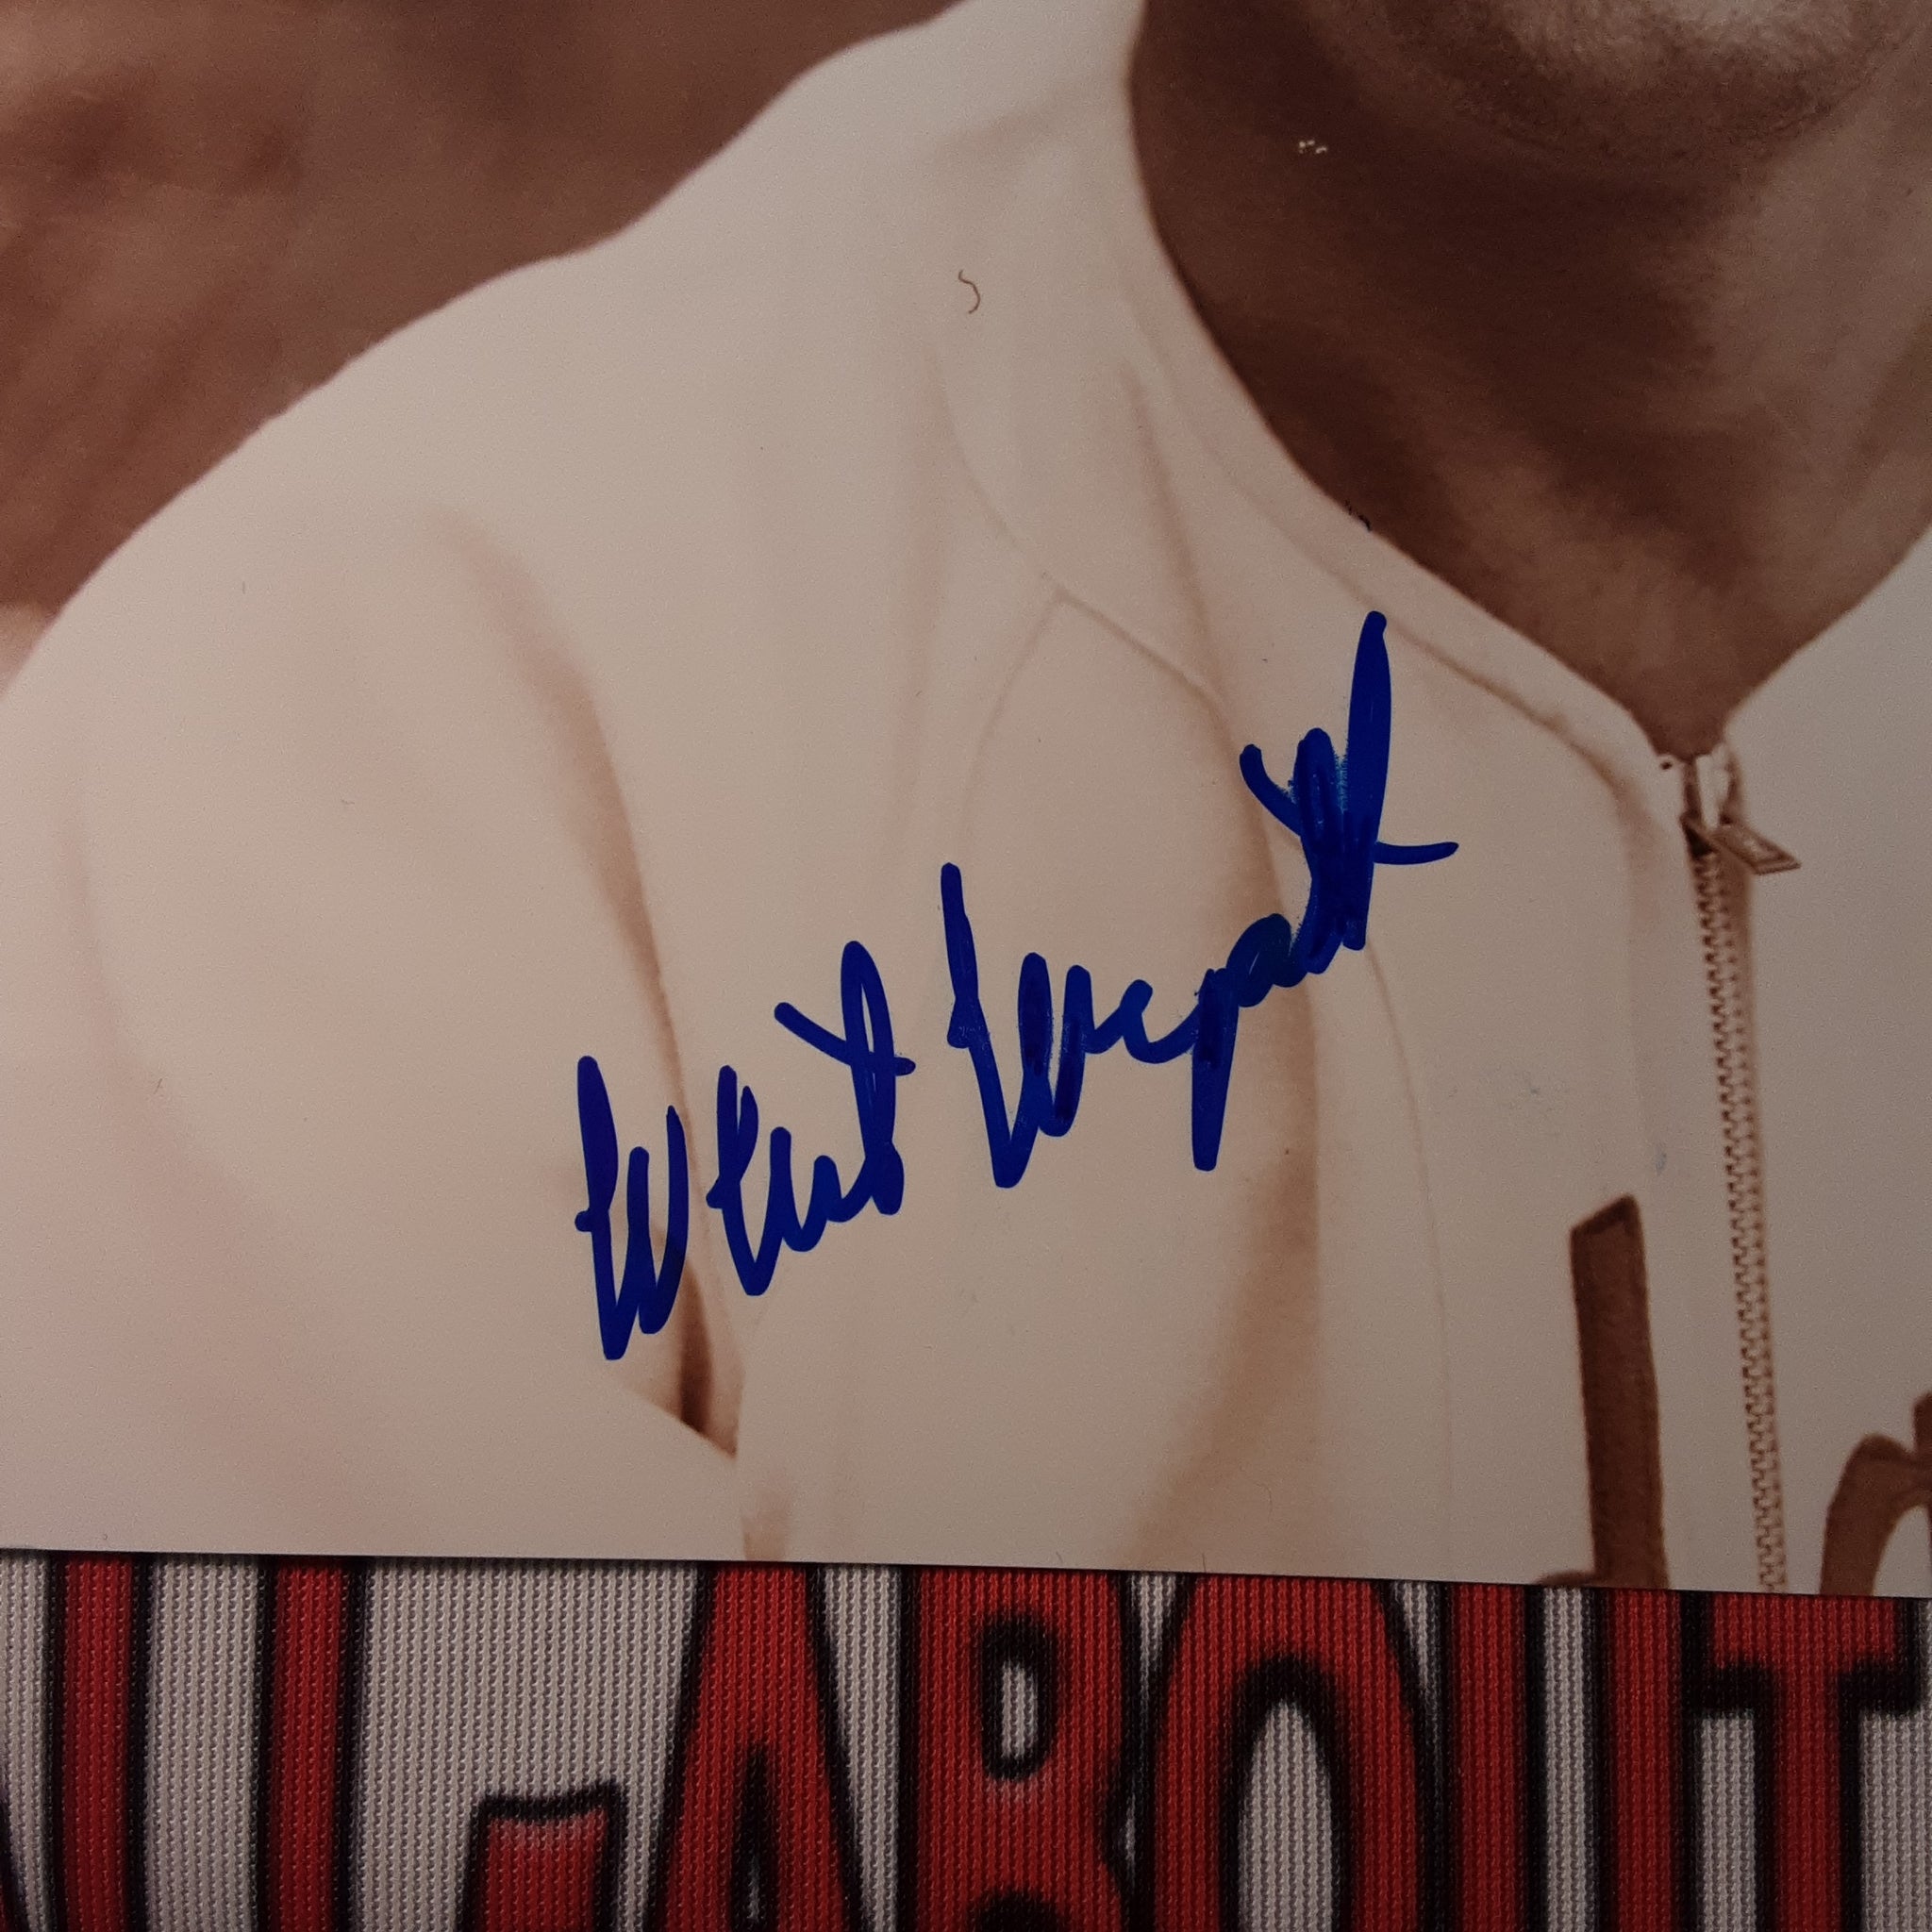 Whit Wyatt Authentic Signed 8x10 Photo Autographed PSA.